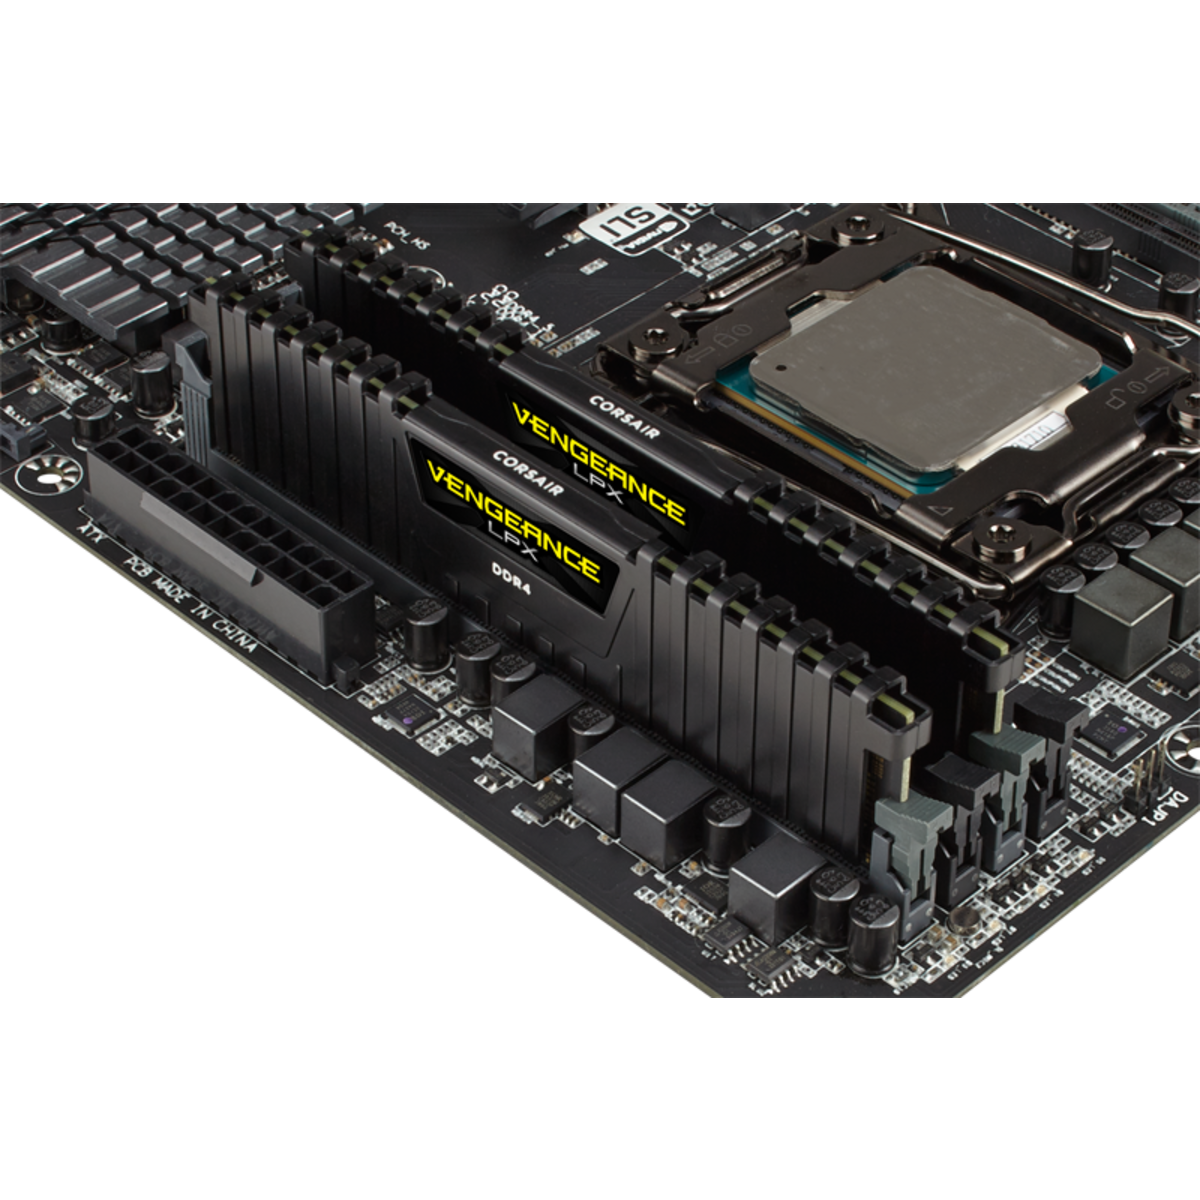 Corsair VENGEANCE® LPX 16GB (2 x 8GB) DDR4 DRAM 2400MHz C16 Memory Kit - Black